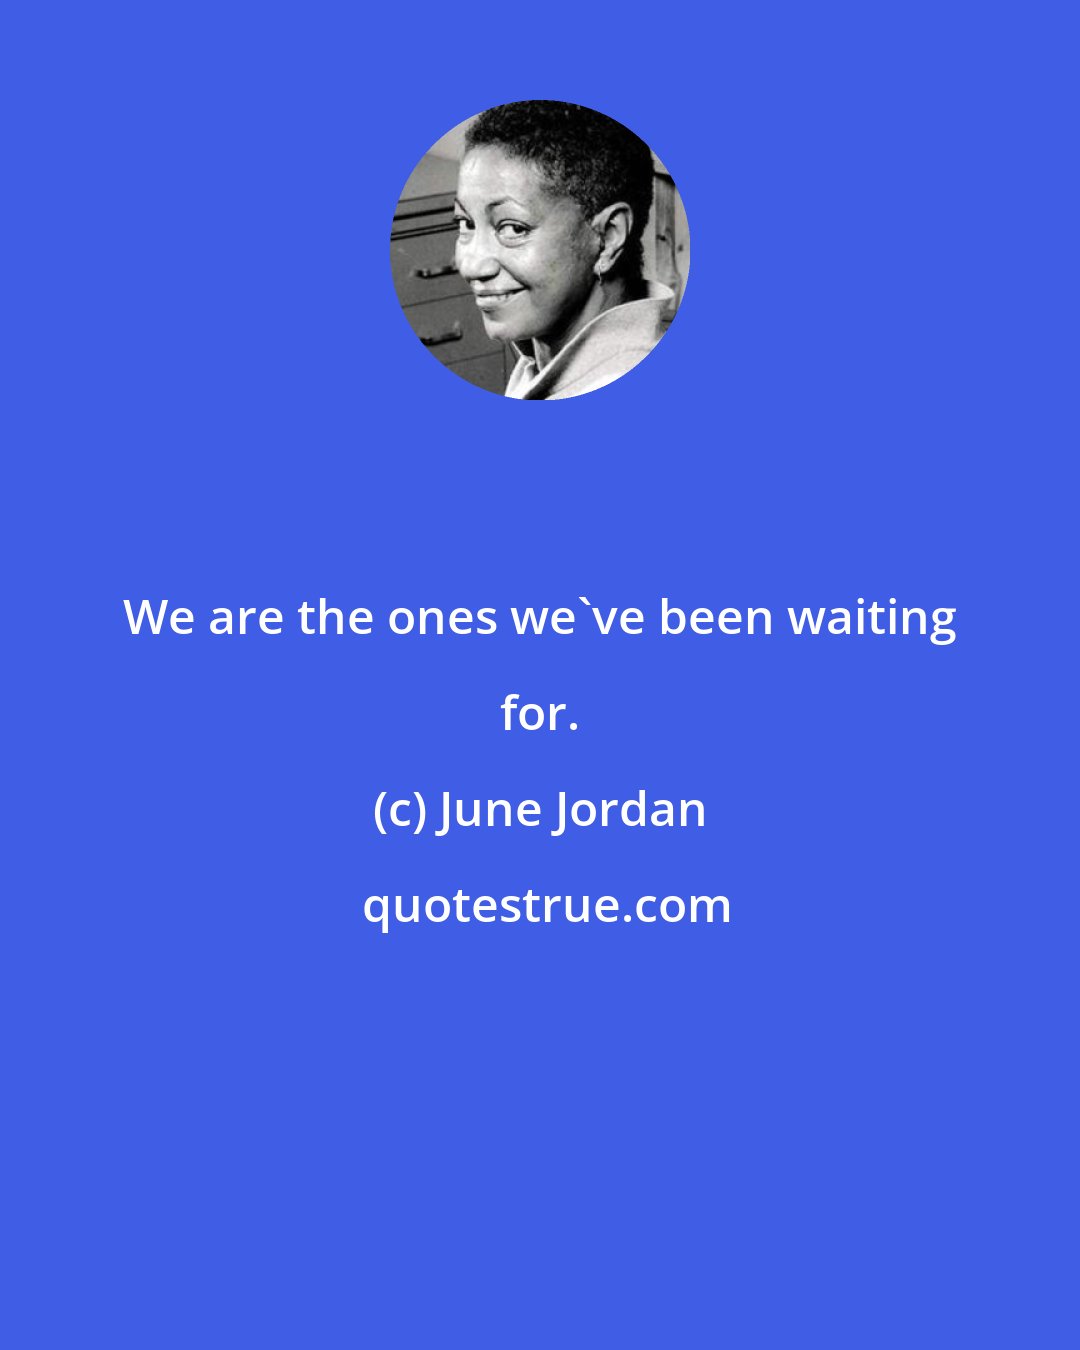 June Jordan: We are the ones we've been waiting for.